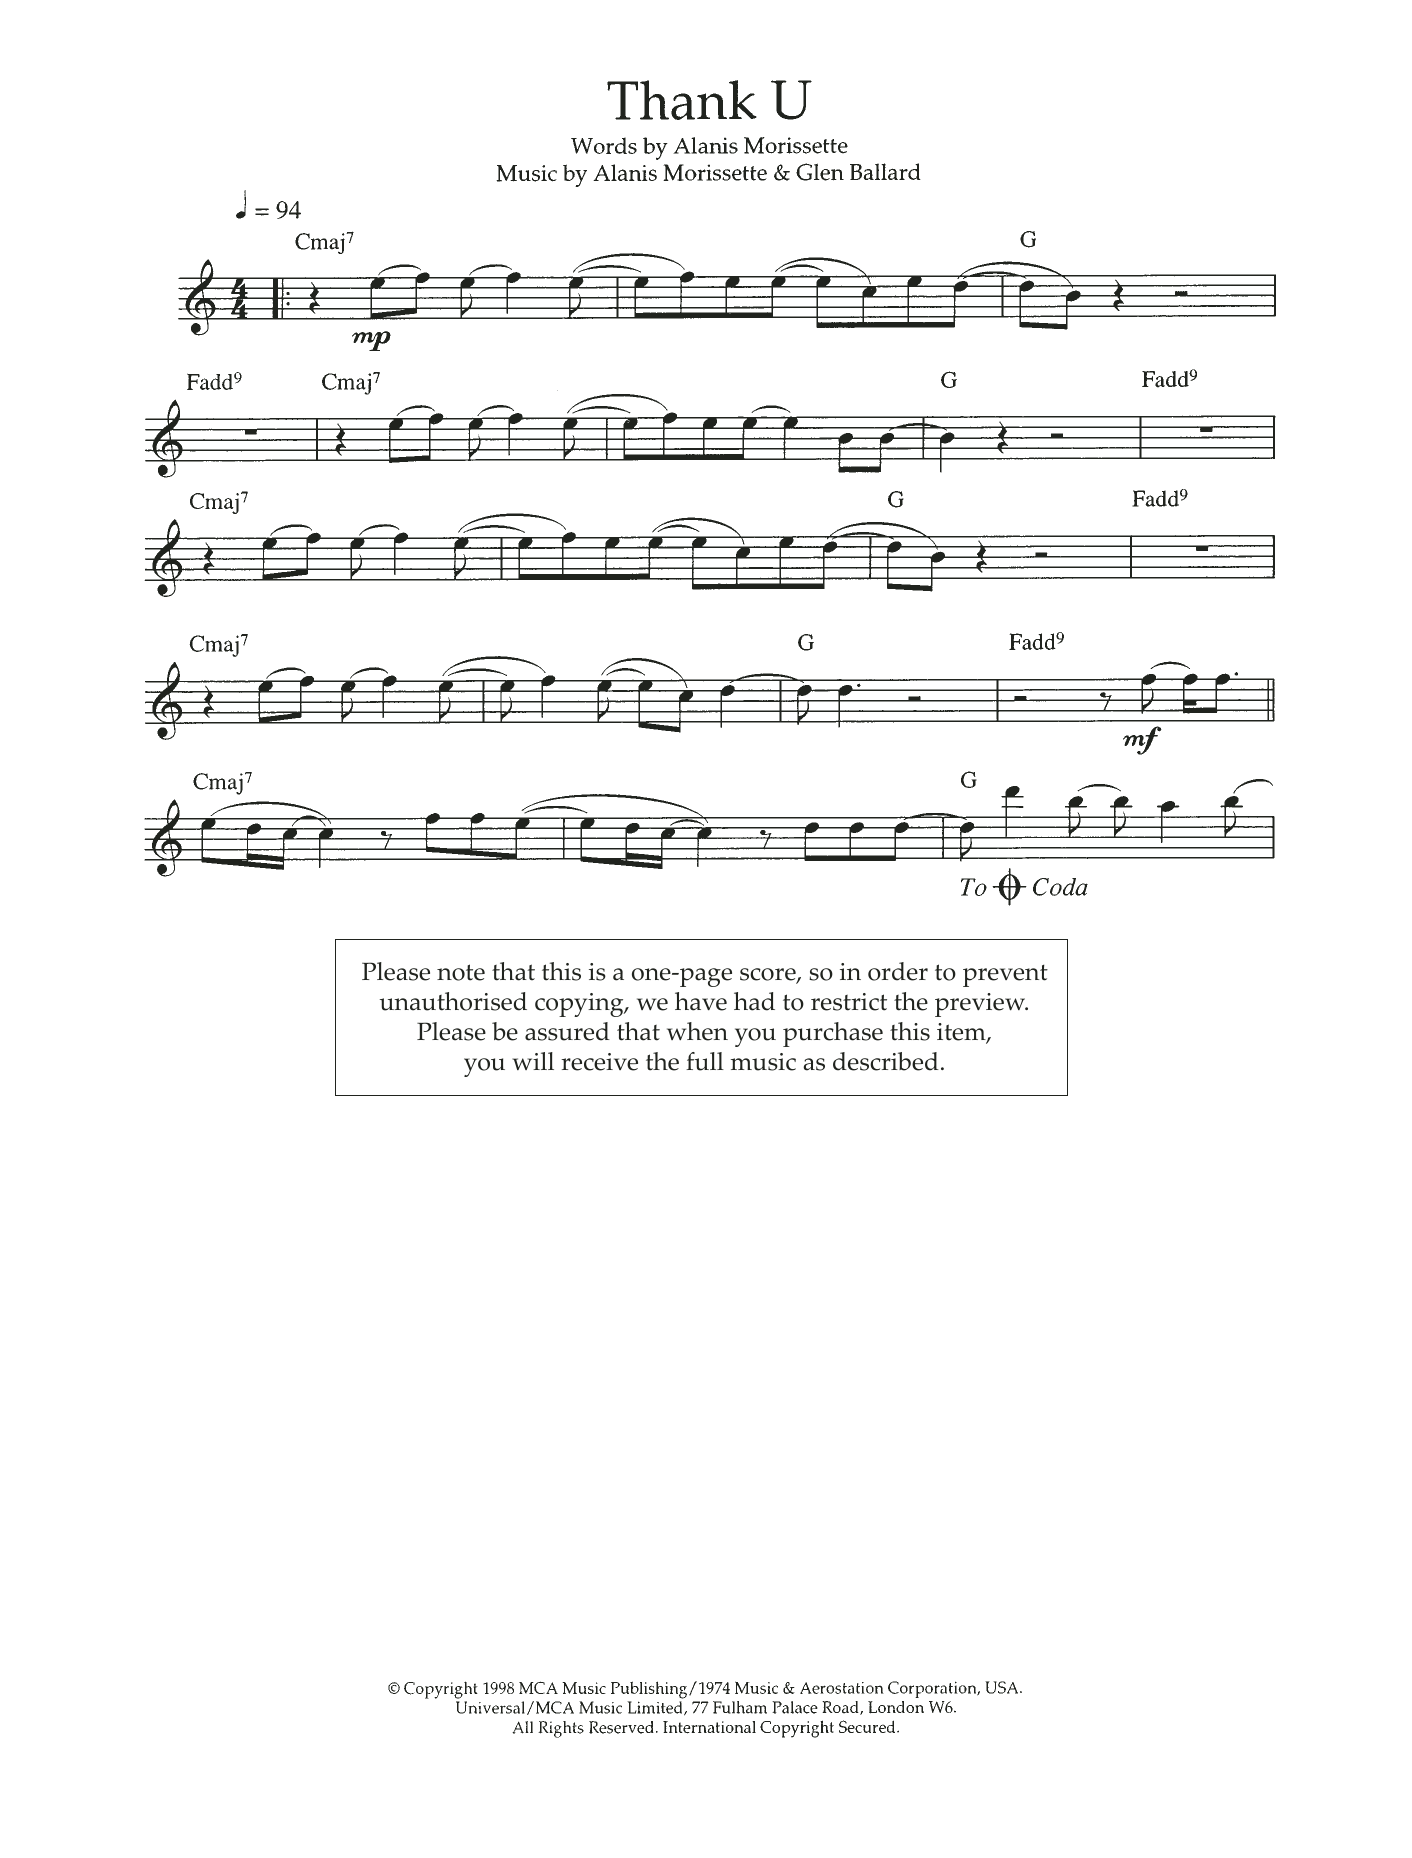 Alanis Morrisette Thank U Sheet Music Notes & Chords for Flute - Download or Print PDF